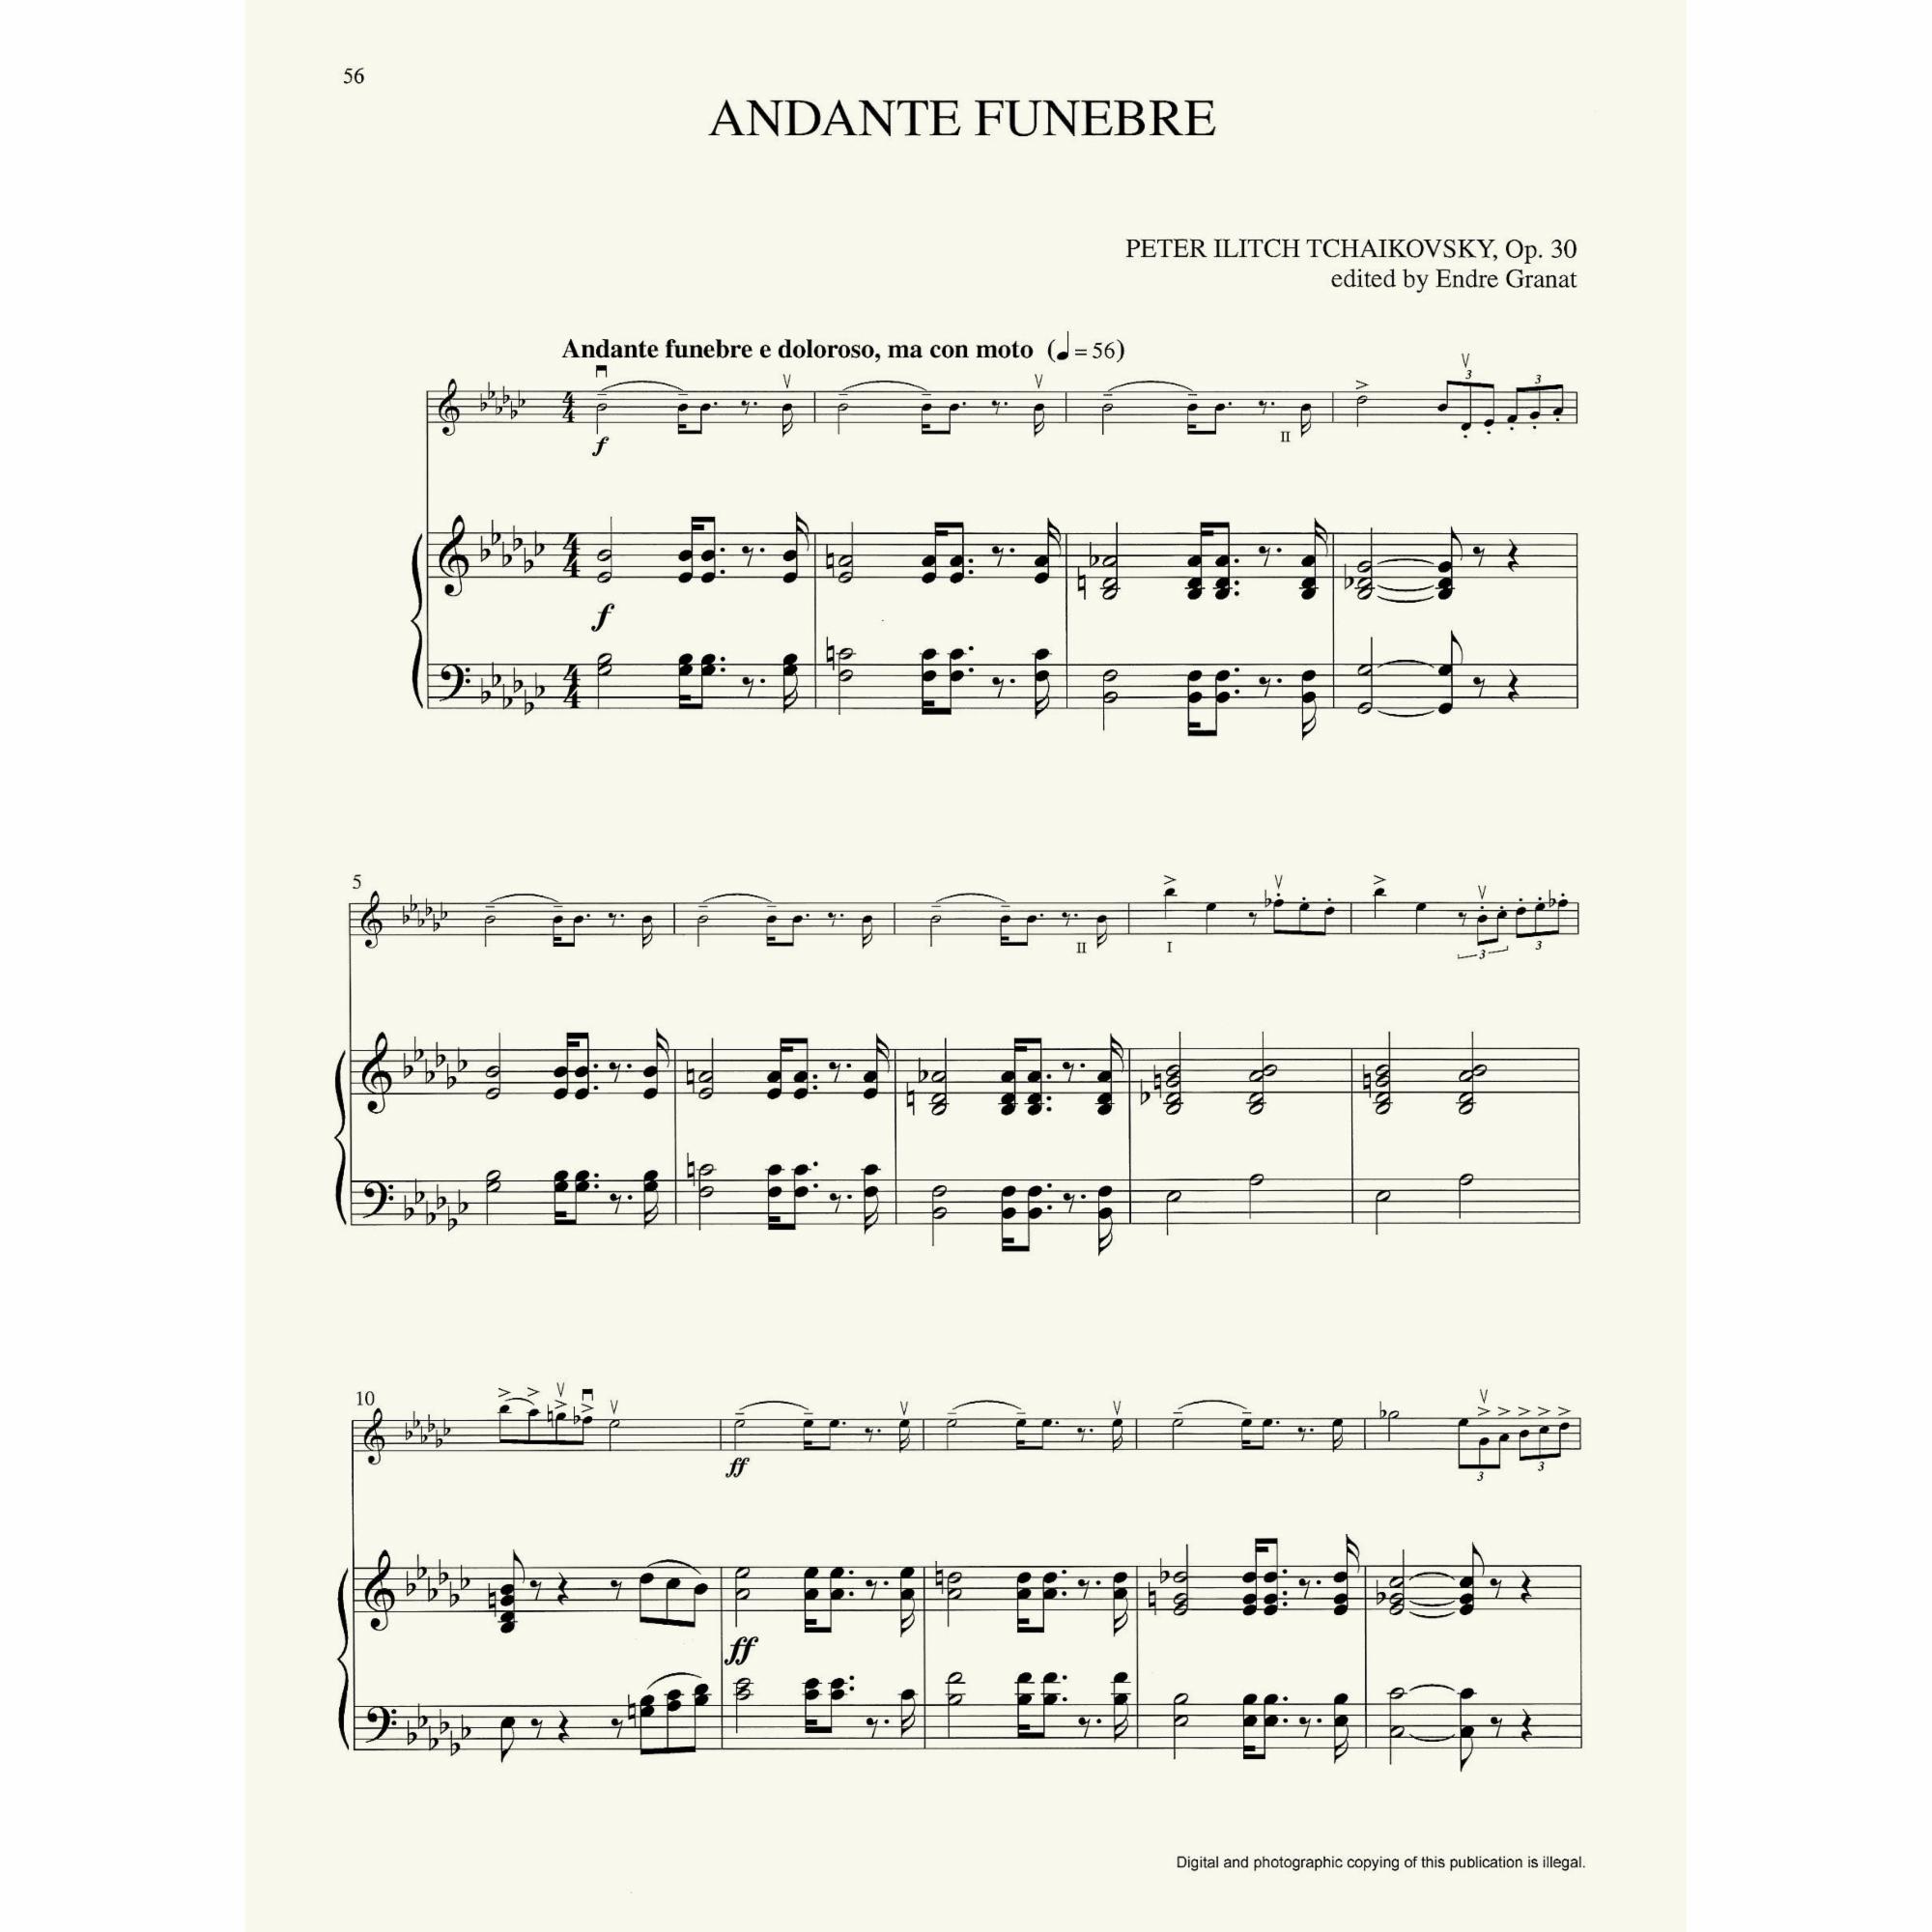 Sample: Piano (Pg. 56)